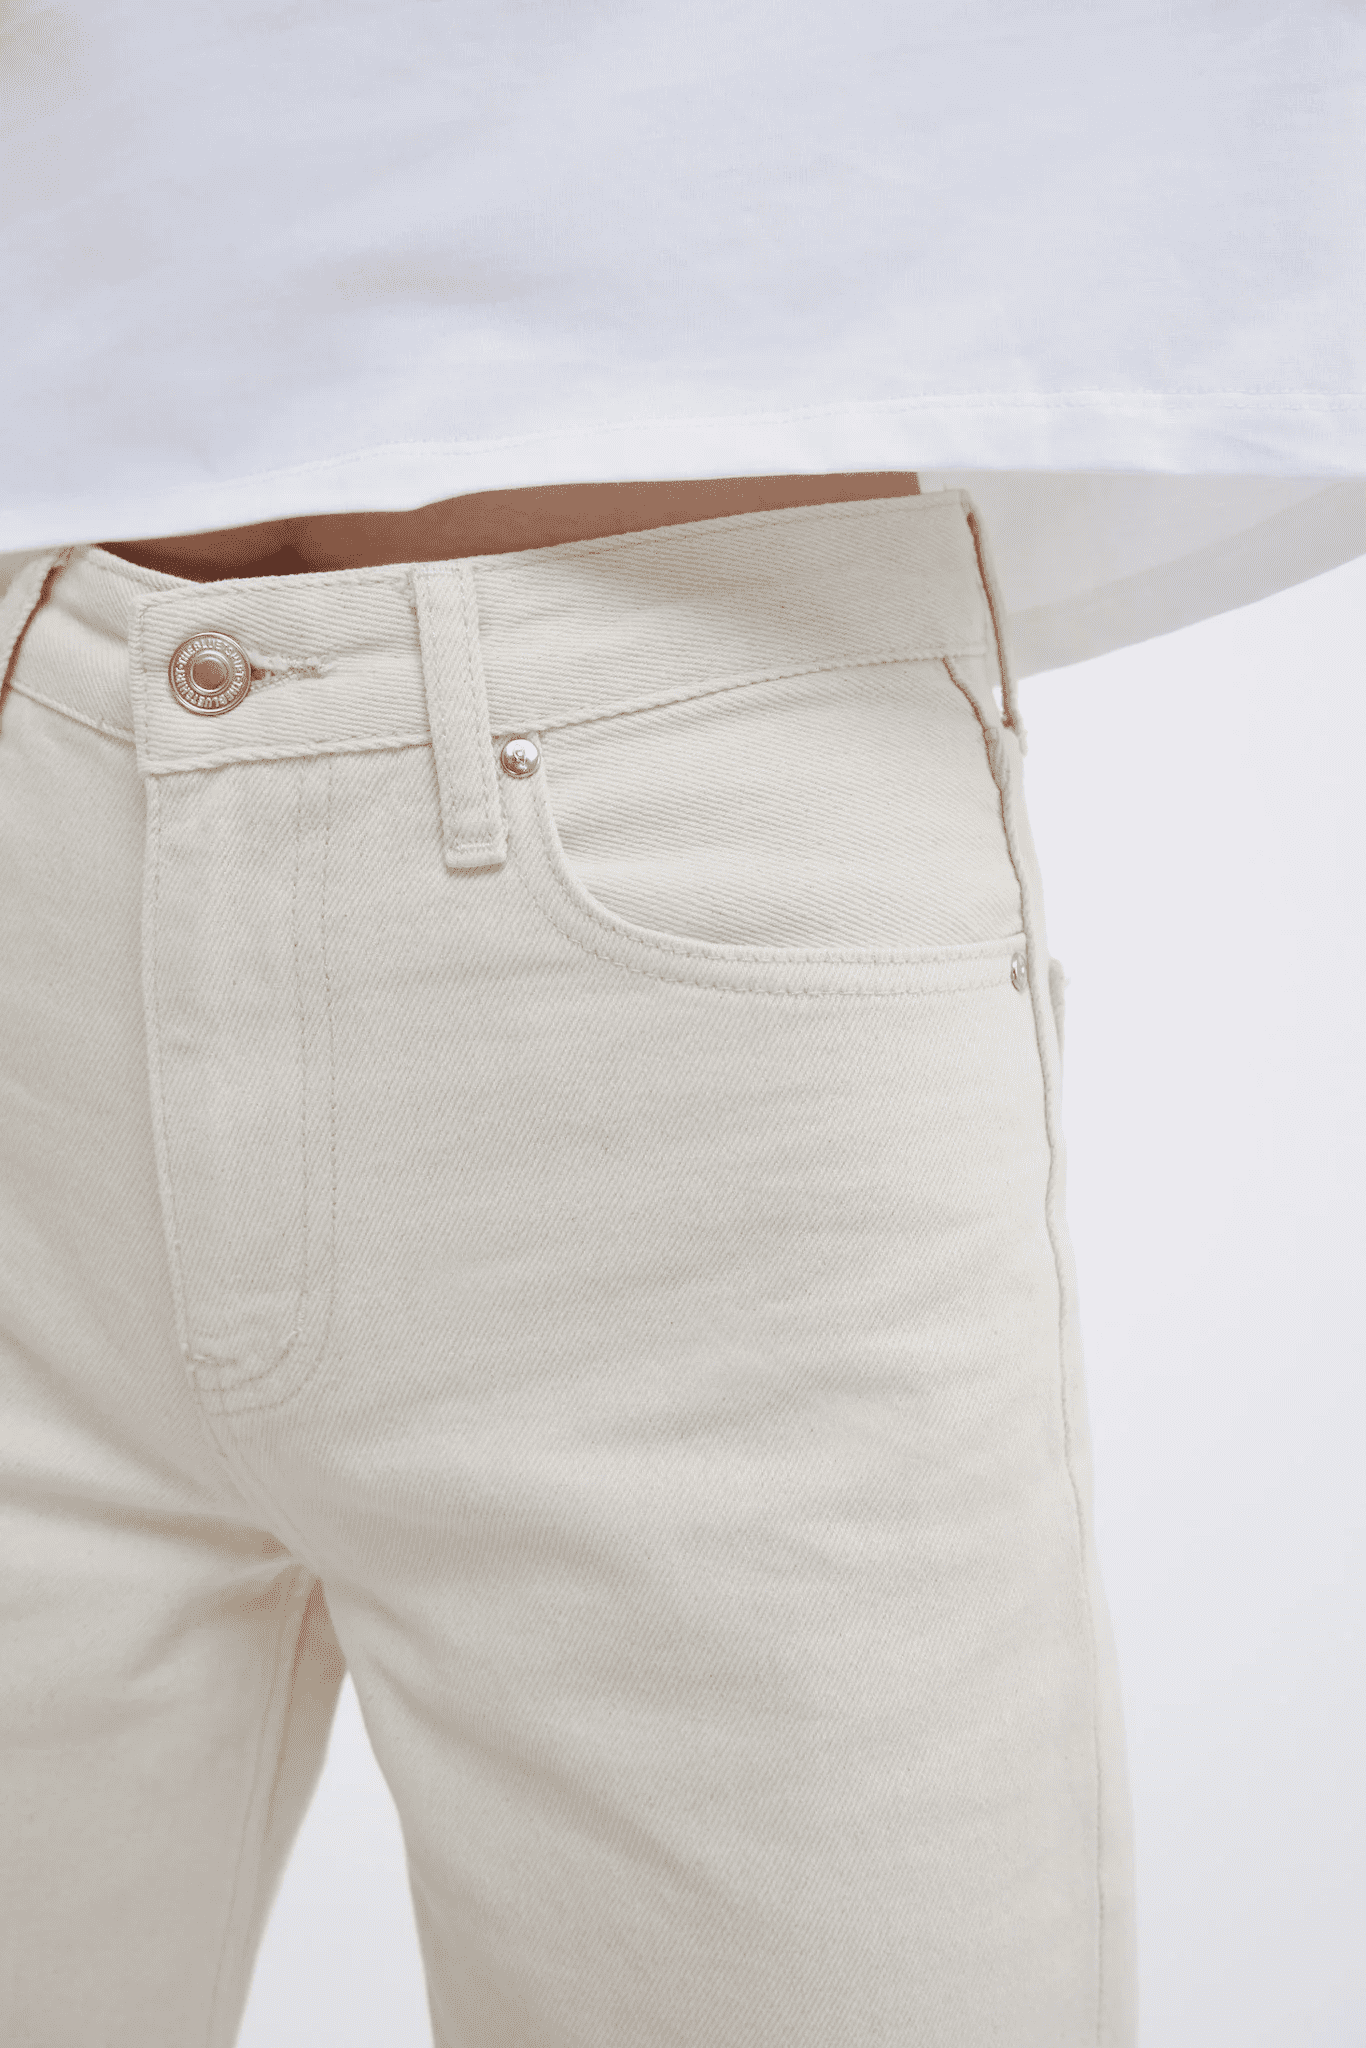 TheBlueTshirt - Quần Jeans Nữ Ống Rộng Màu Trắng Kem - Brooklyn Cuffed Jeans - Sand Beige Wash